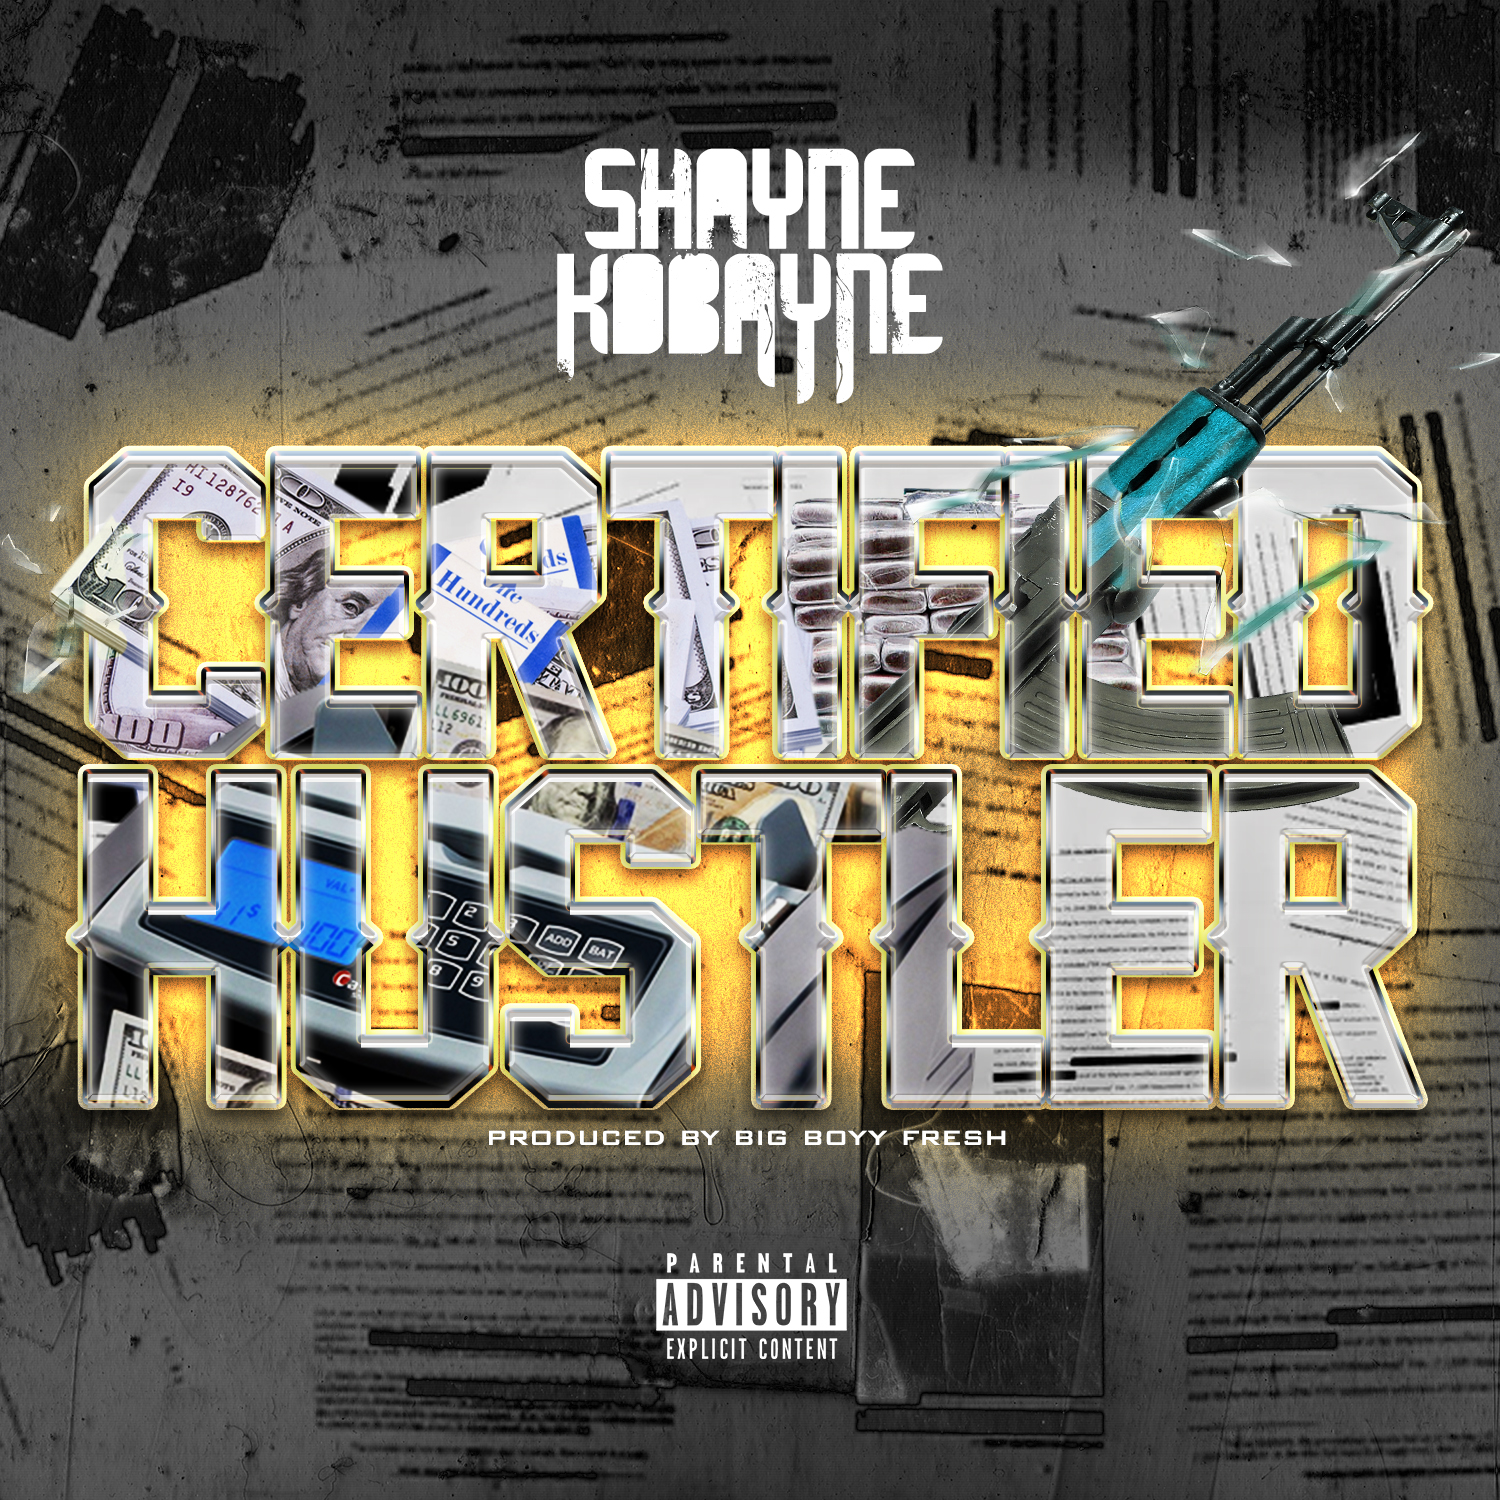 Shayne Kobayne is thriving by any means with new single “Certified Hustler” @shaynekobayne